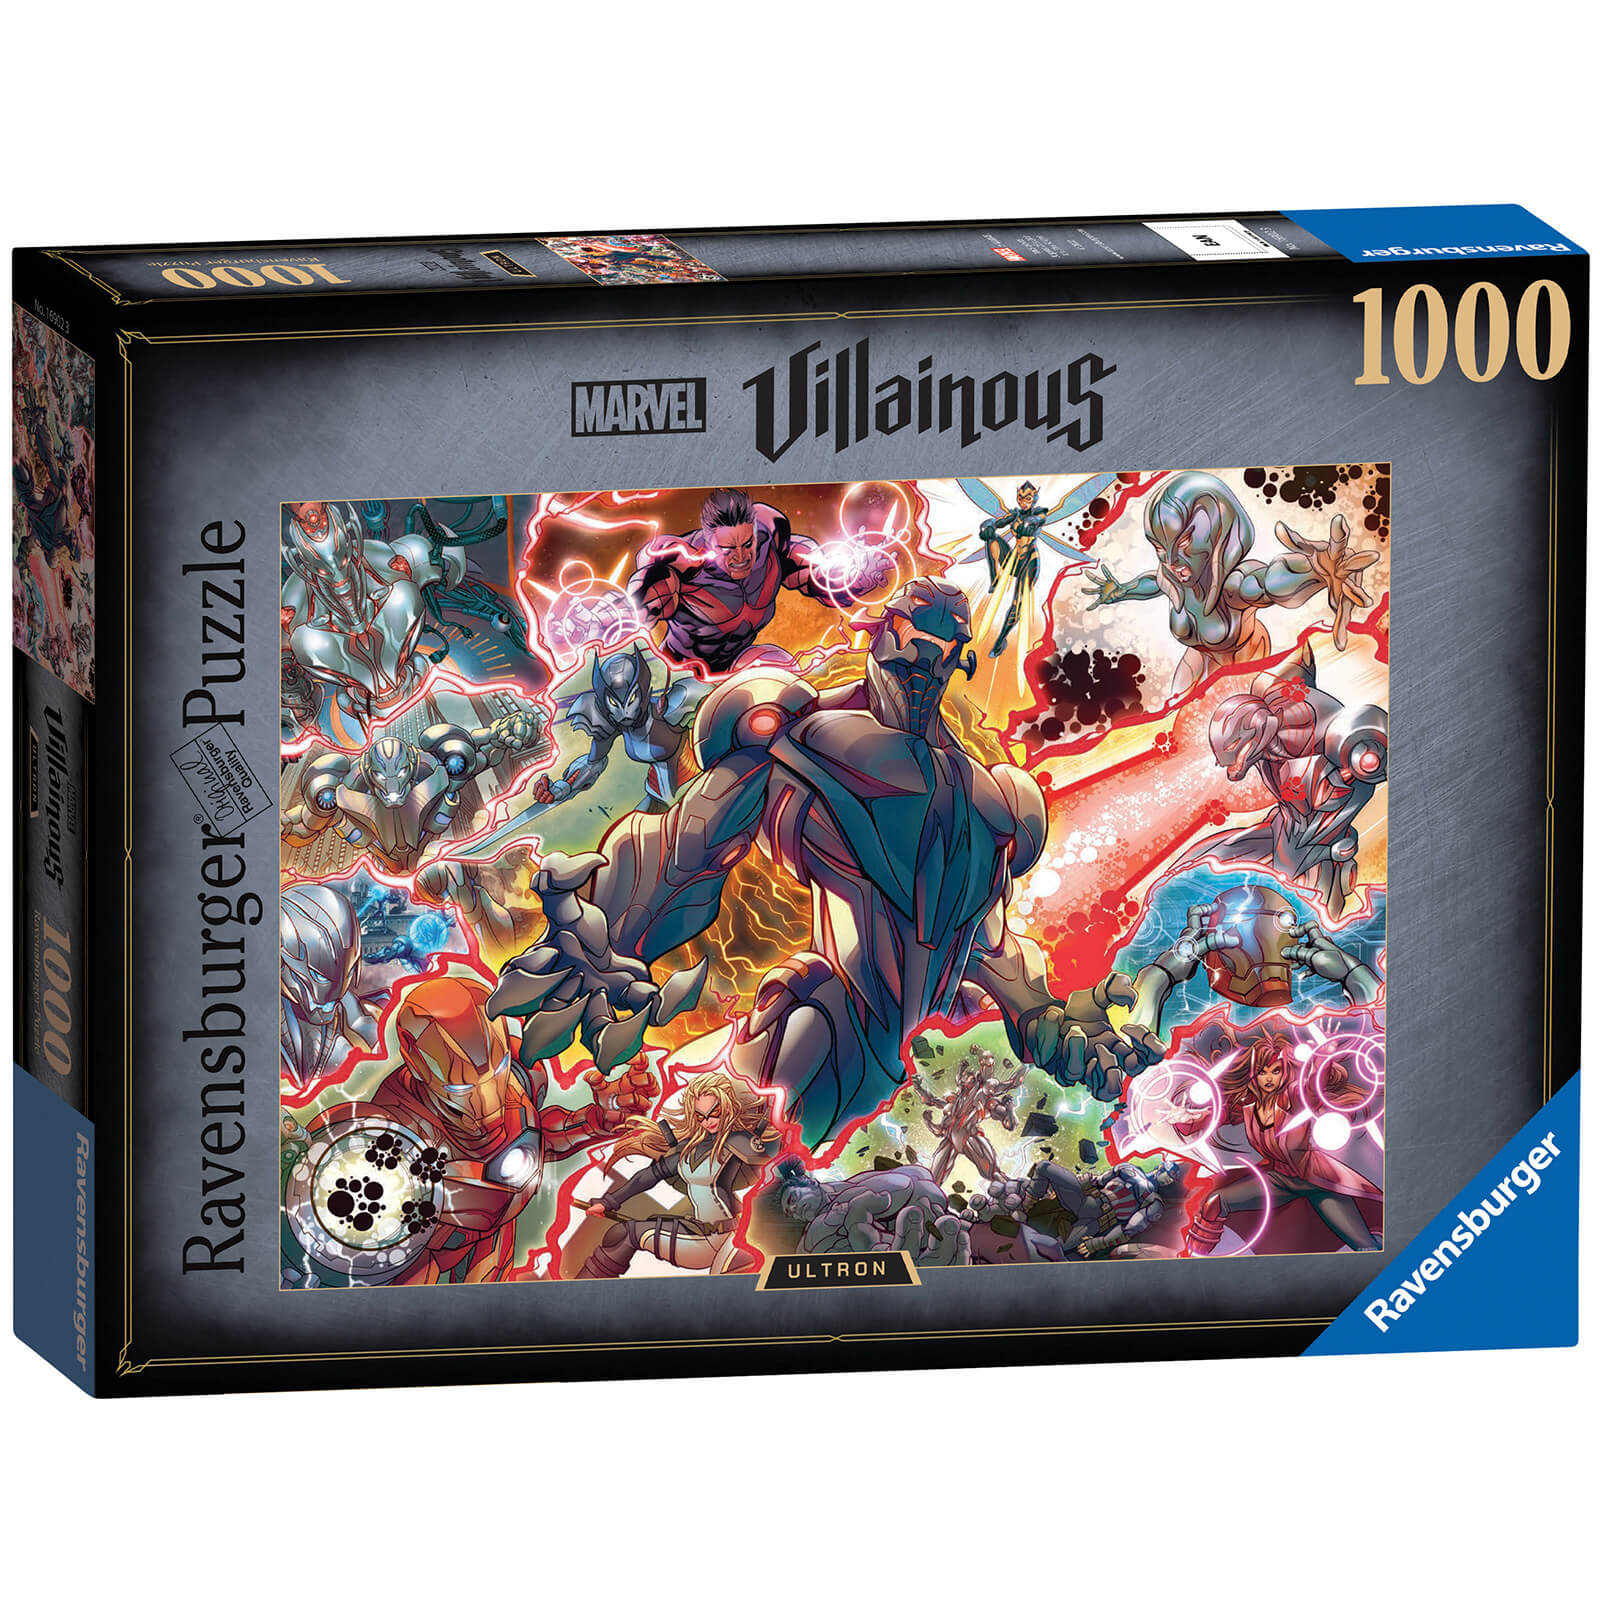 Ravensburger Marvel Villainous Ultron 1000 piece Jigsaw Puzzle